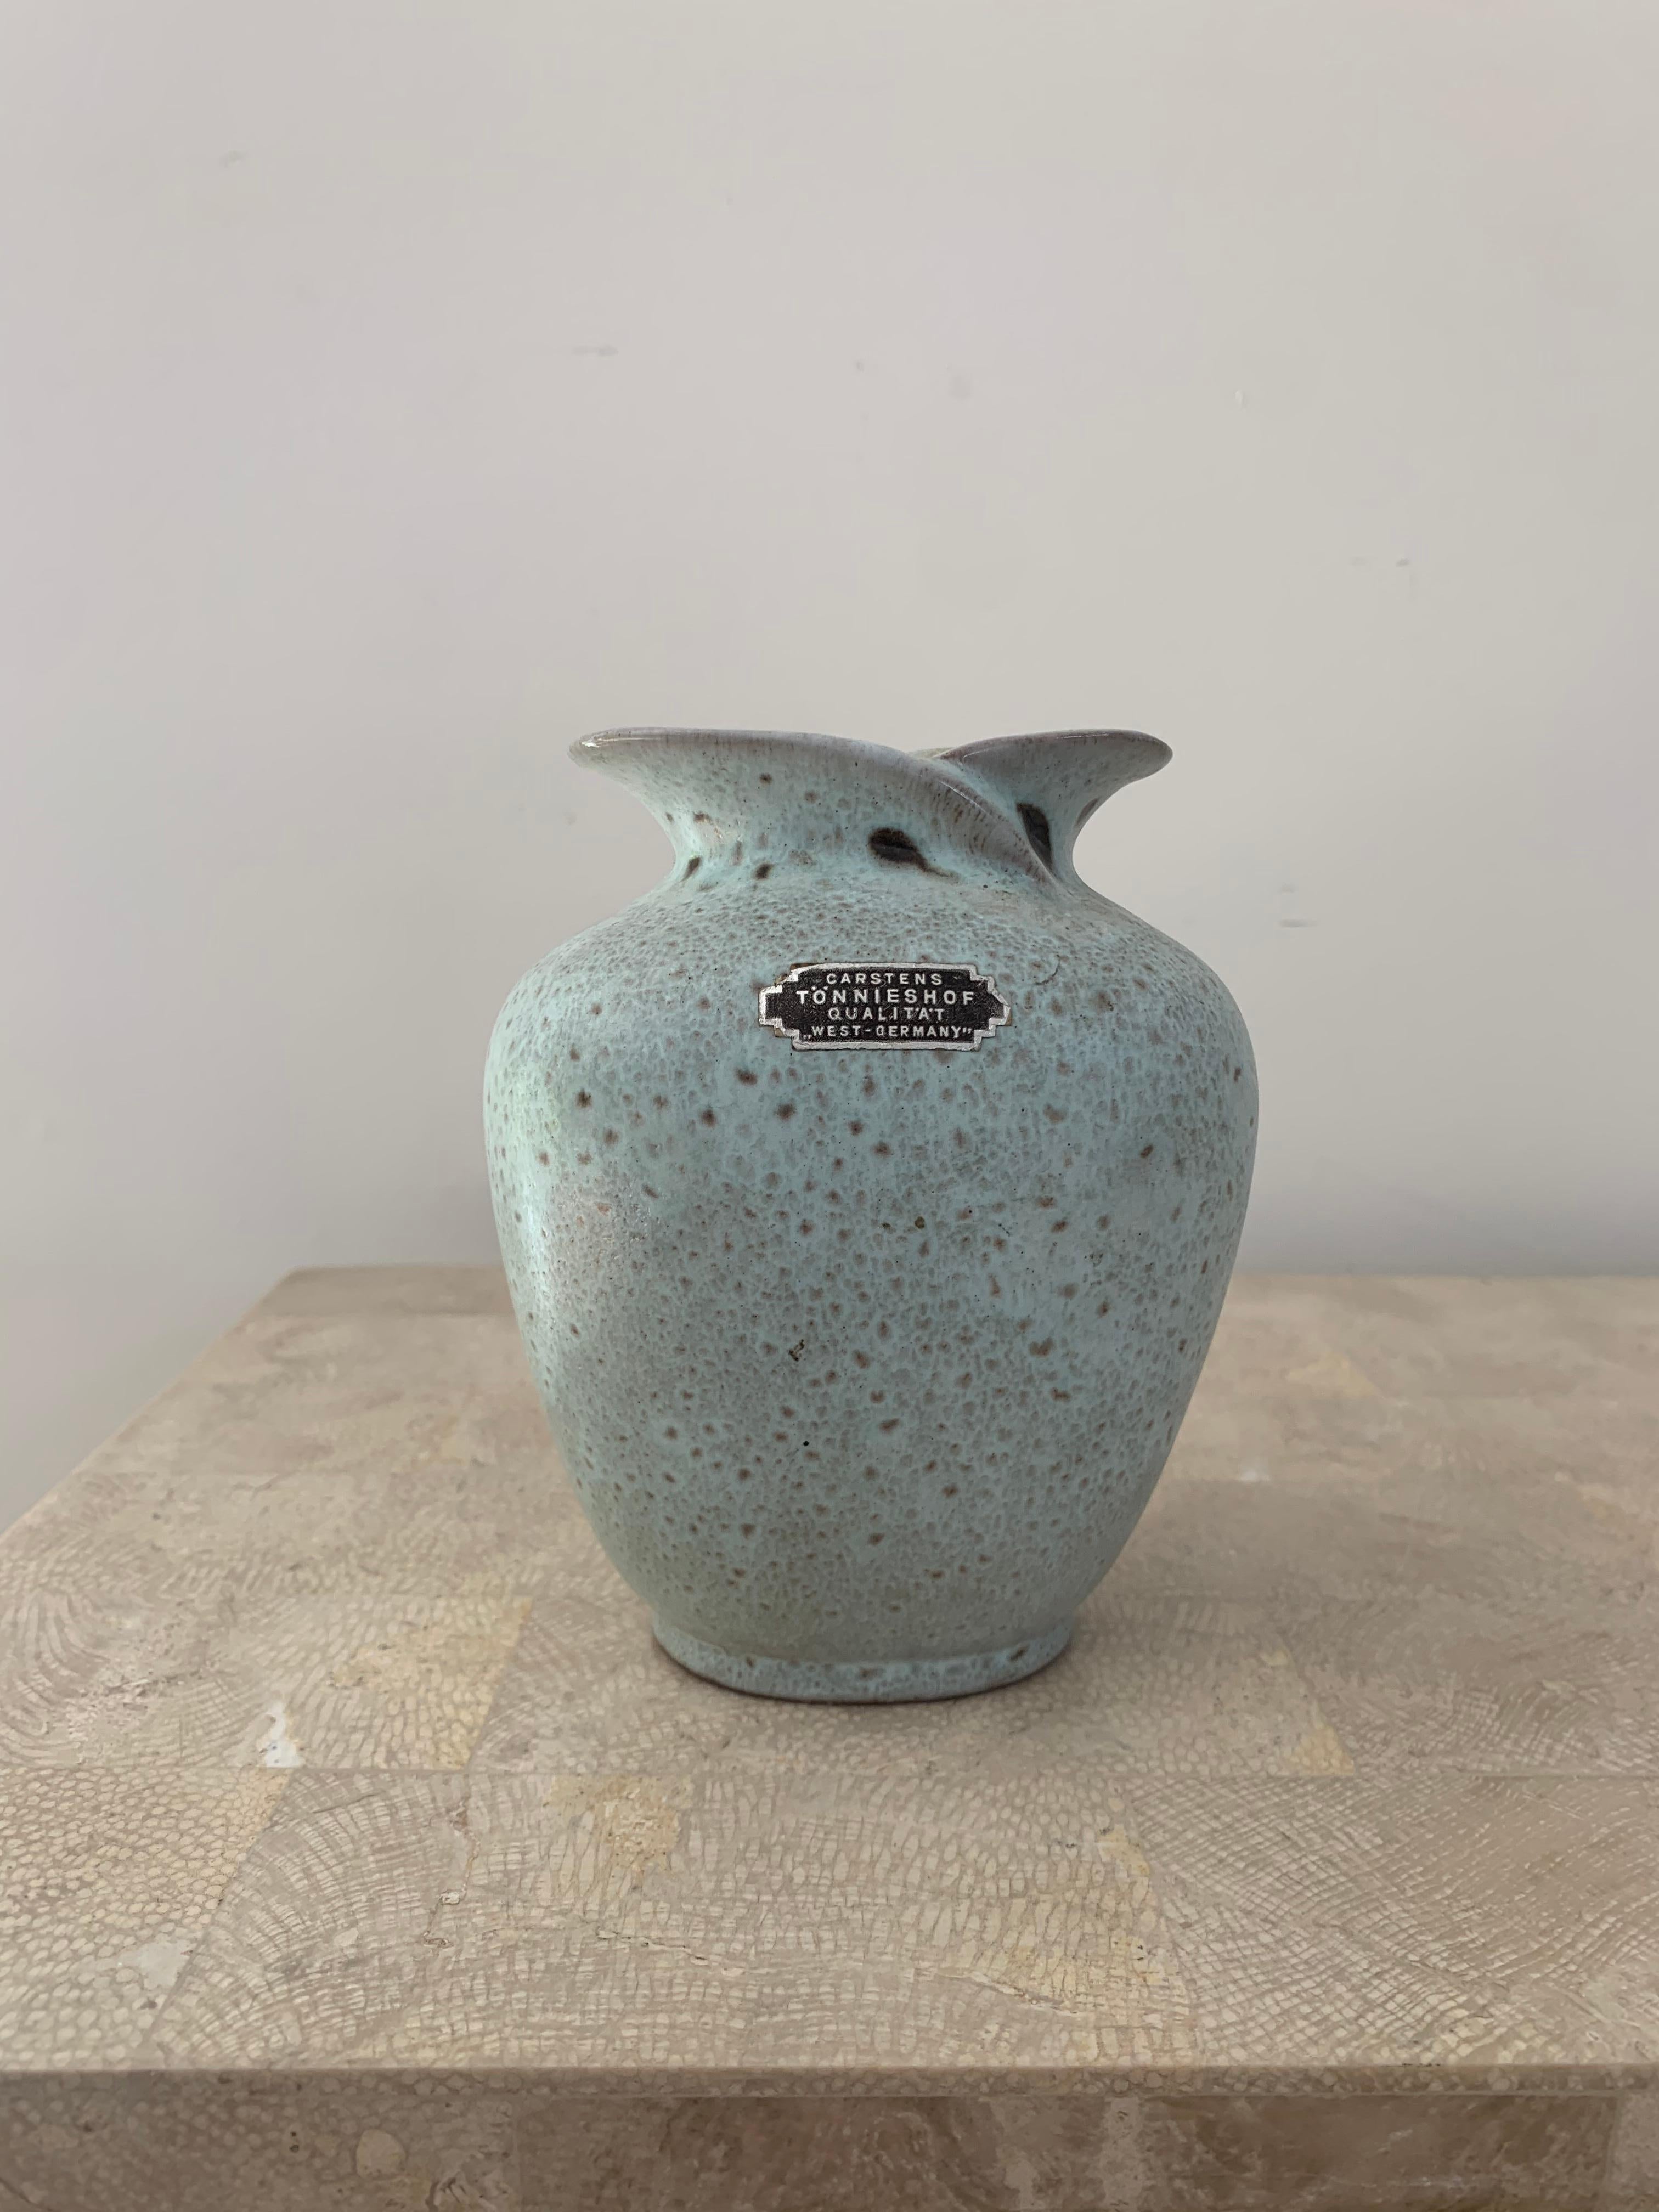 Carstens Tönnieshof Pockmarked Ceramic Vase from West Germany, circa 1950s 4